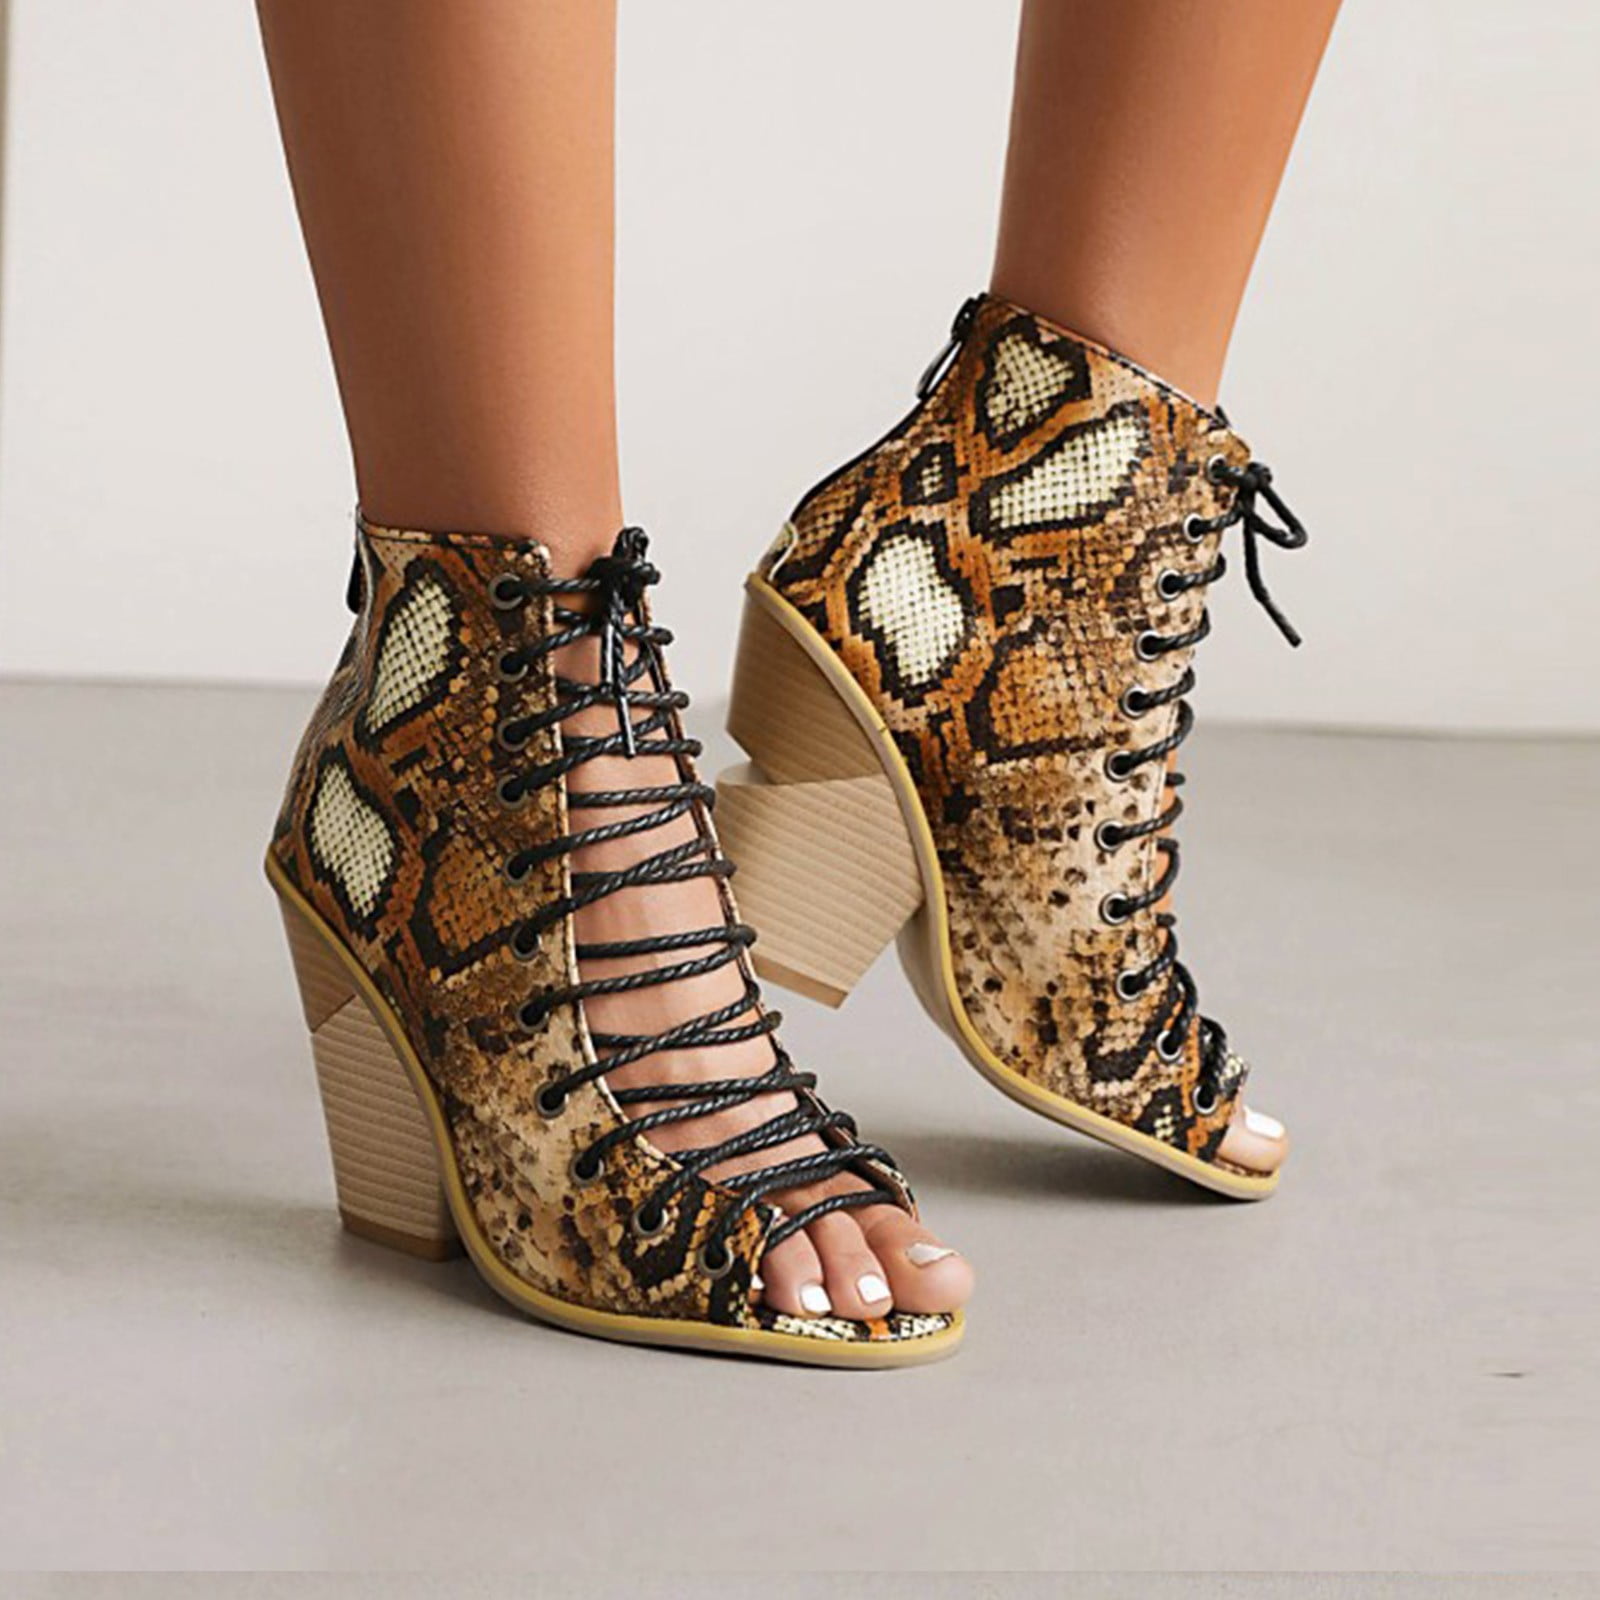 Stylish Snake Print Heel Sandals